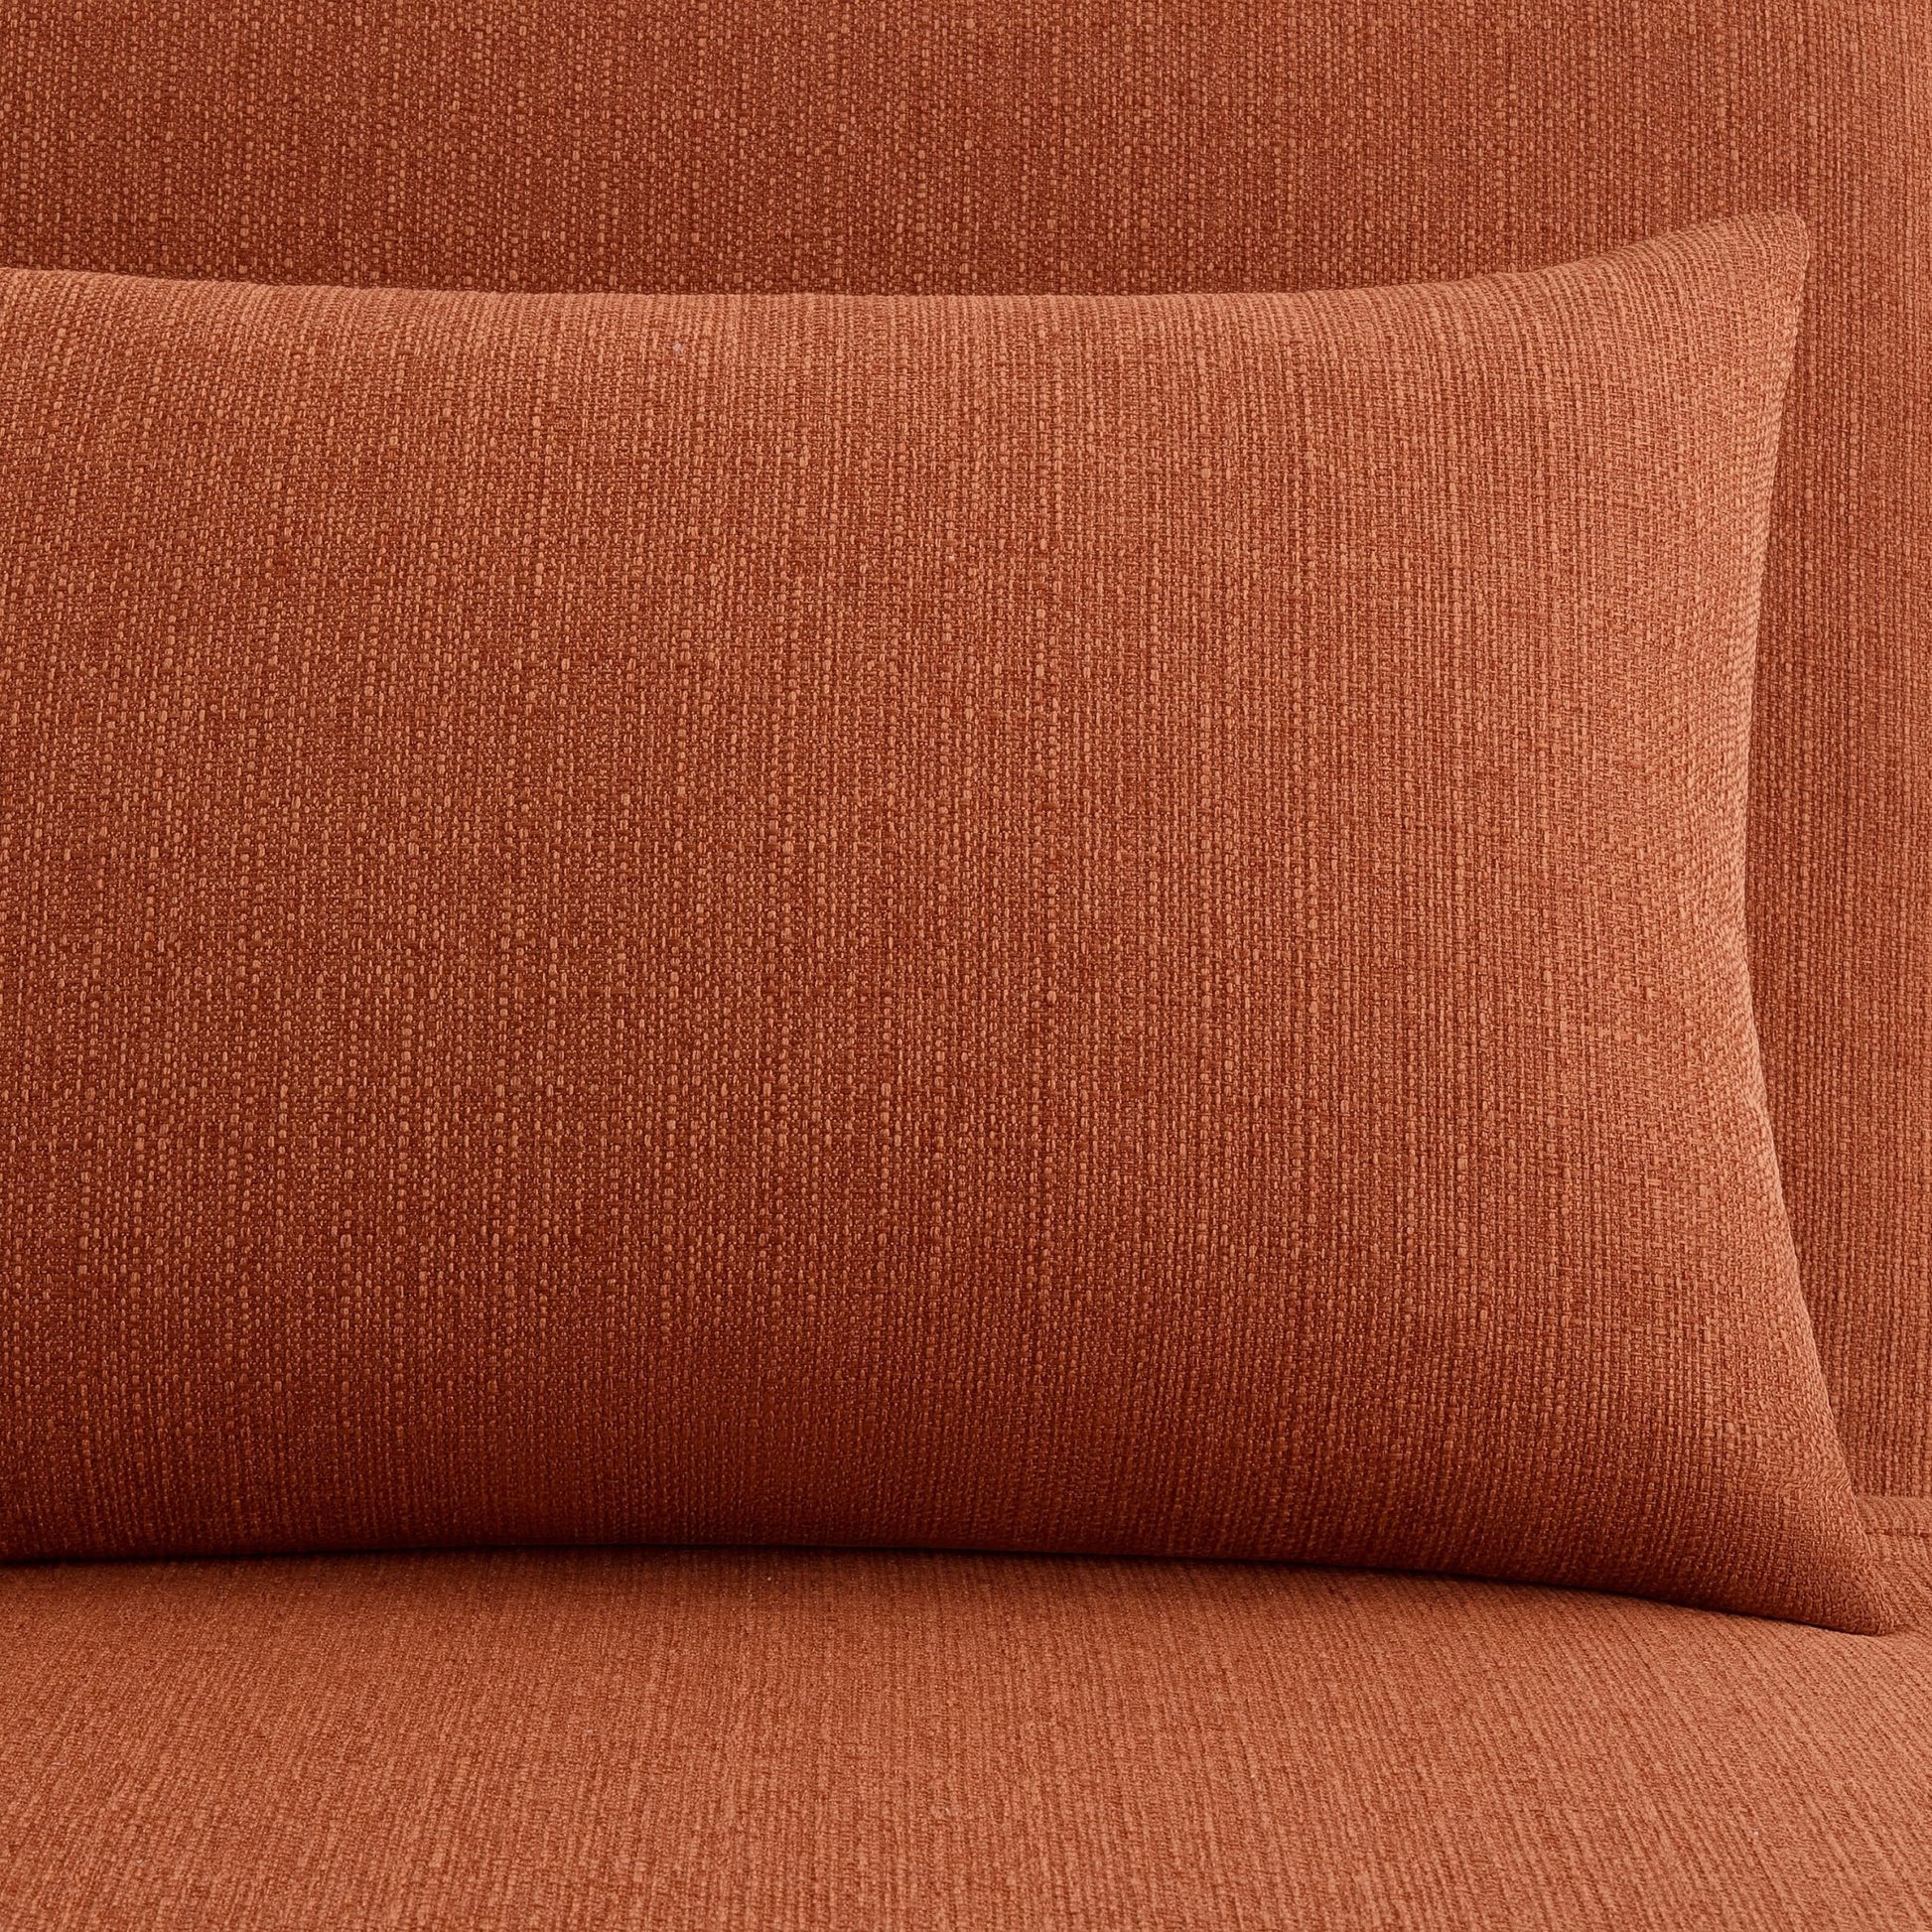 Seattle Double Click Clack Sofa Bed - Burnt Orange - DUSK